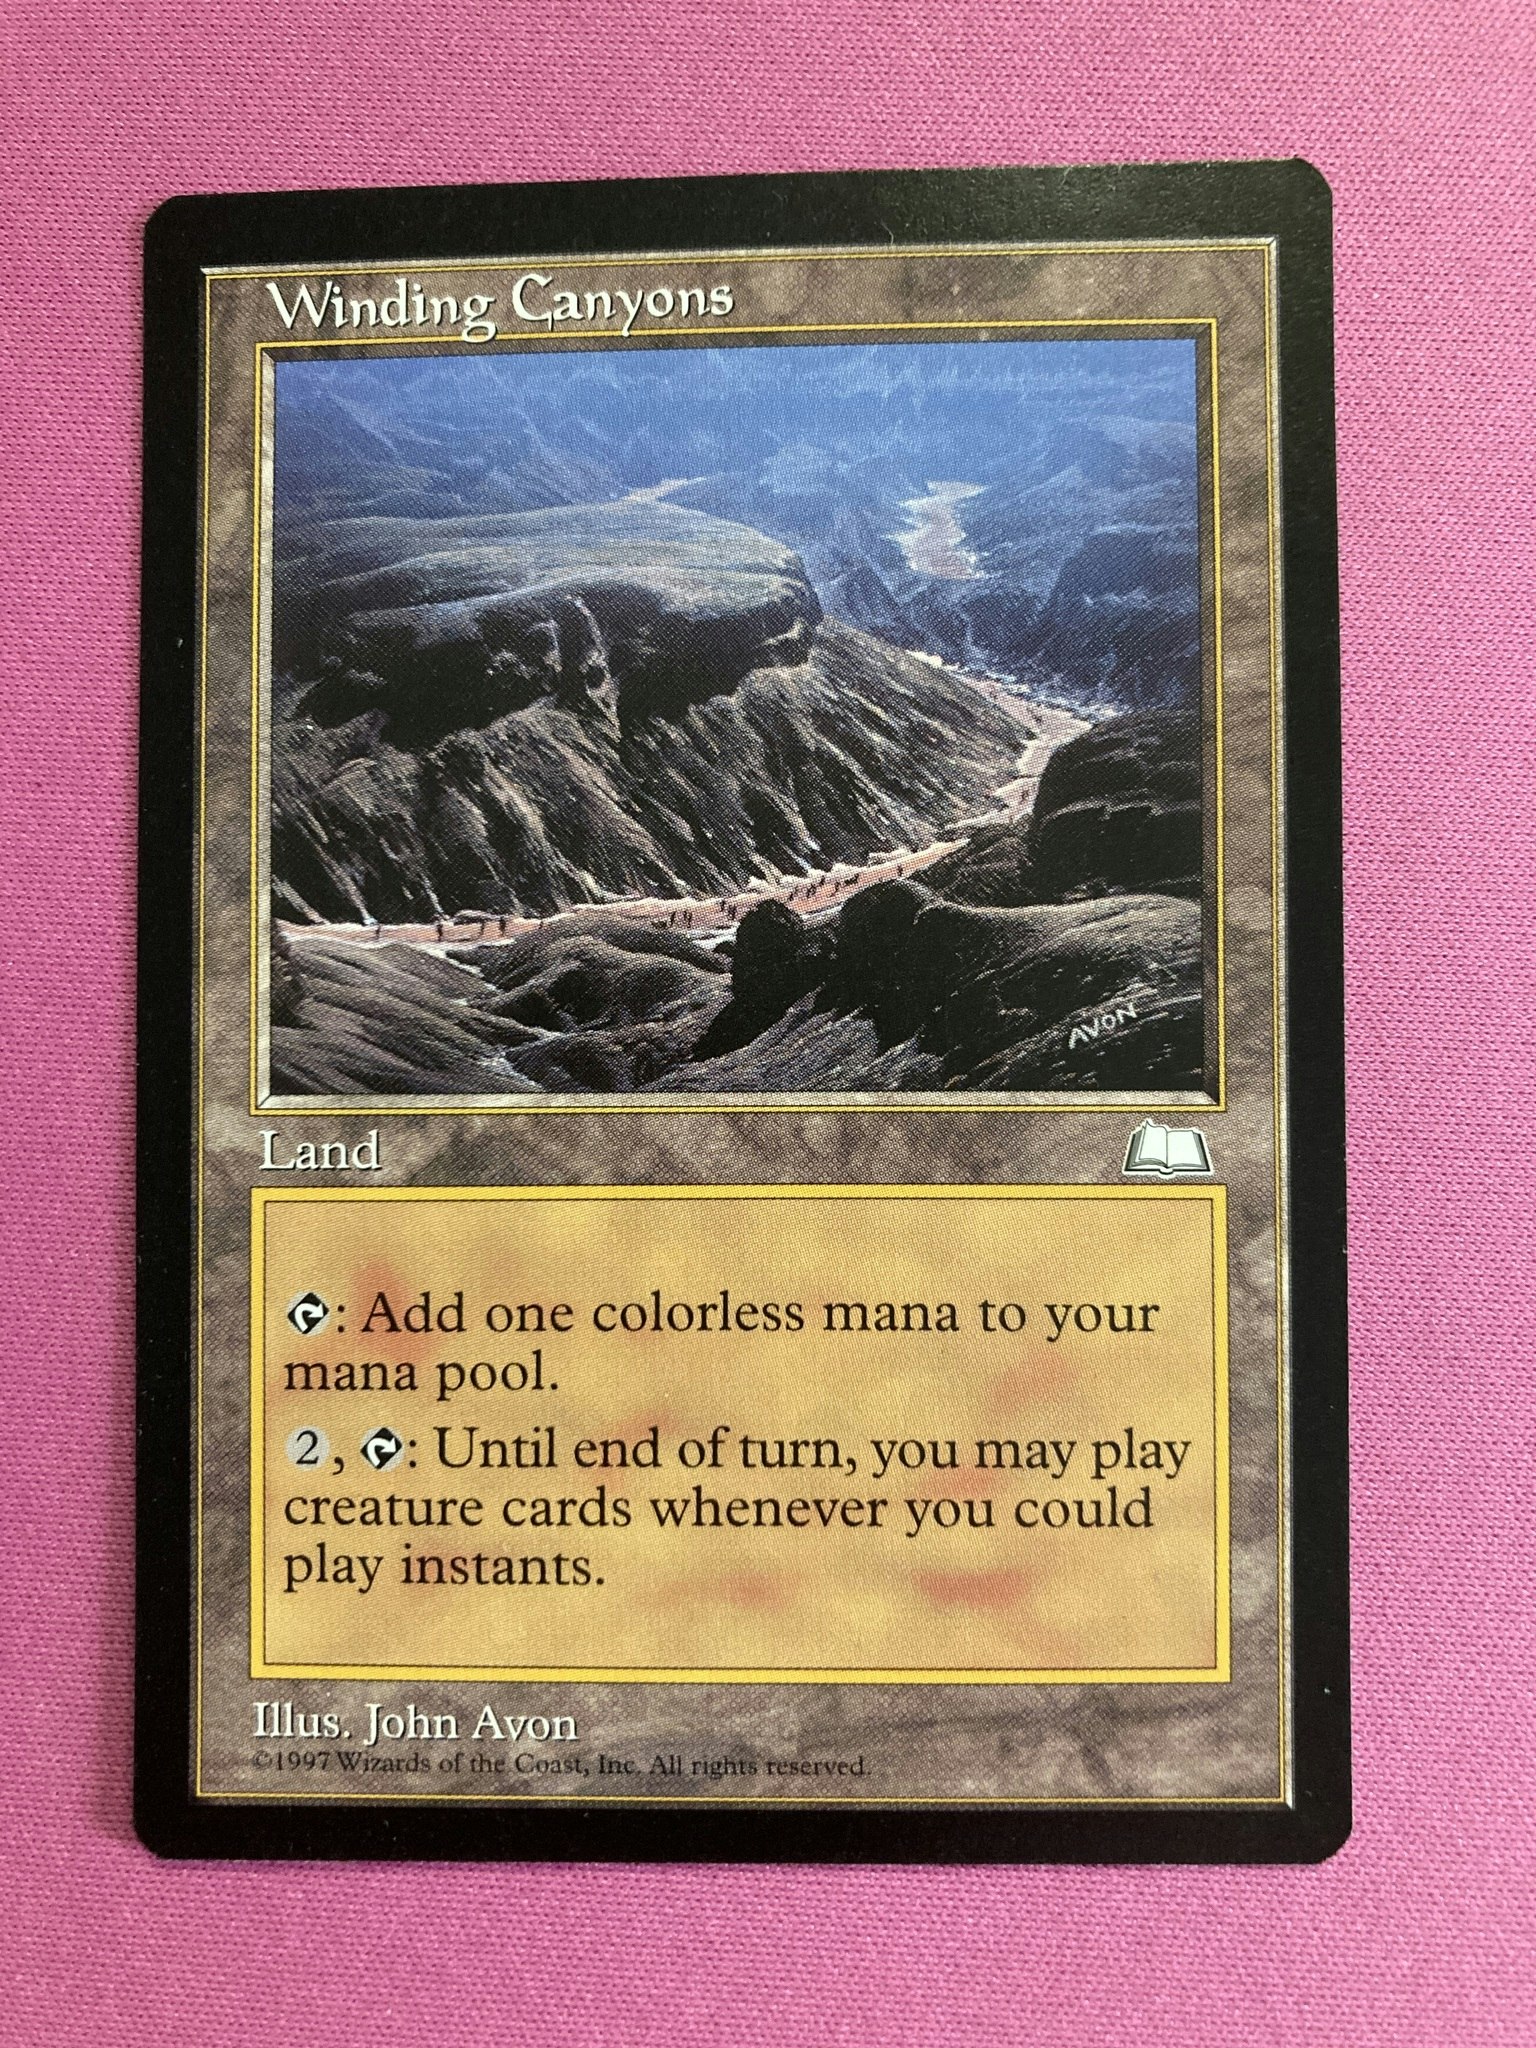 Winding canyons (begagnat kort, EX)